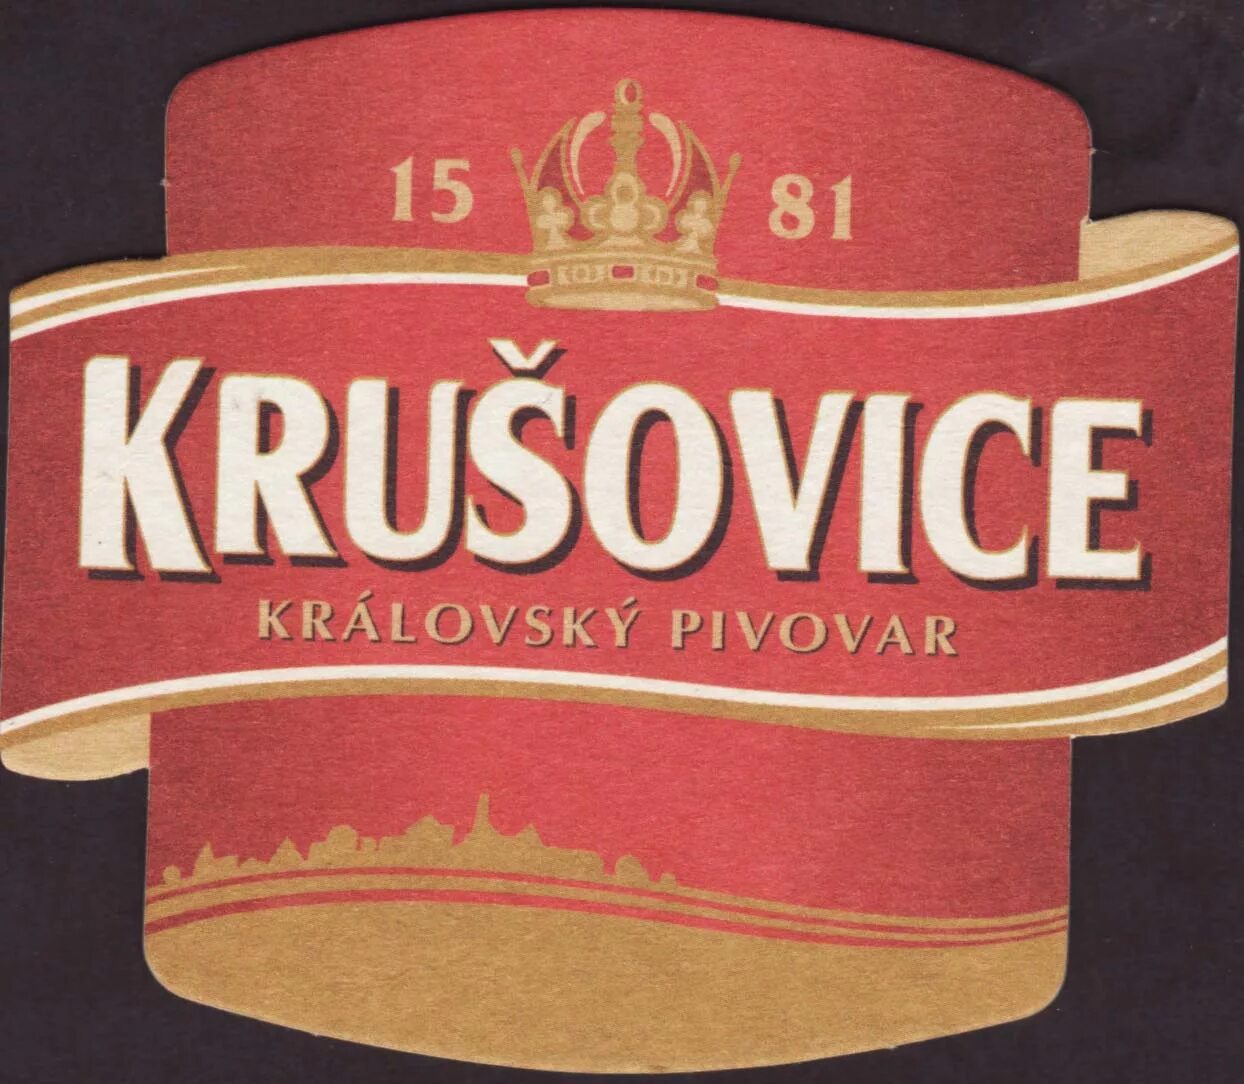 Пиво крушовице купить. Чешское пиво Krusovice. Krusovice пиво лого. Крушовице пиво разливное. Ценник Крушовице.